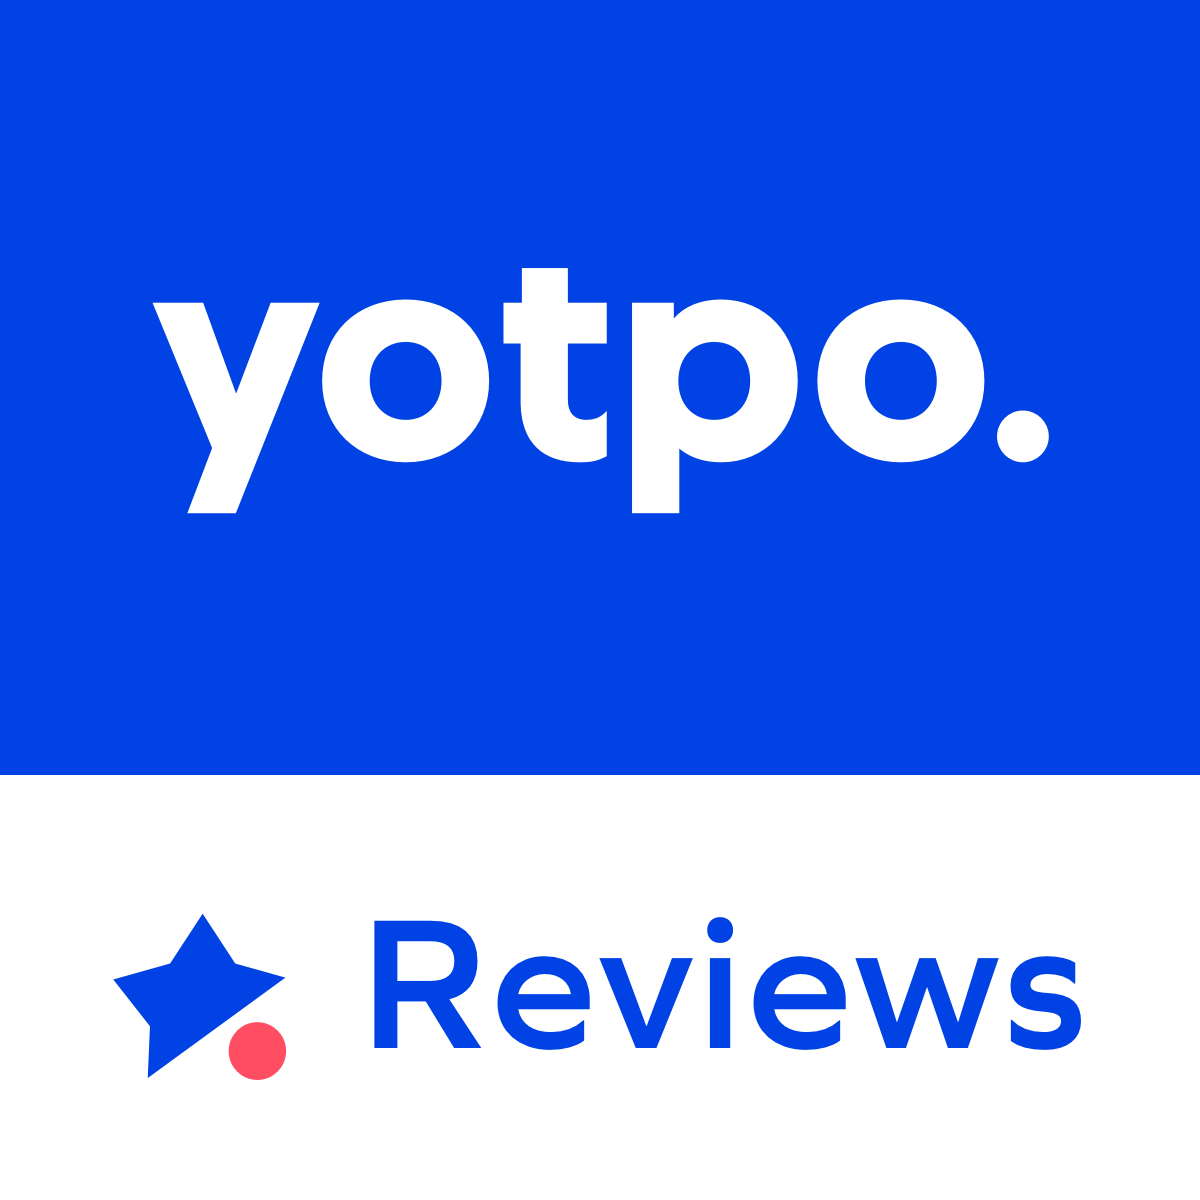 Yotpo Product Reviews & Photos